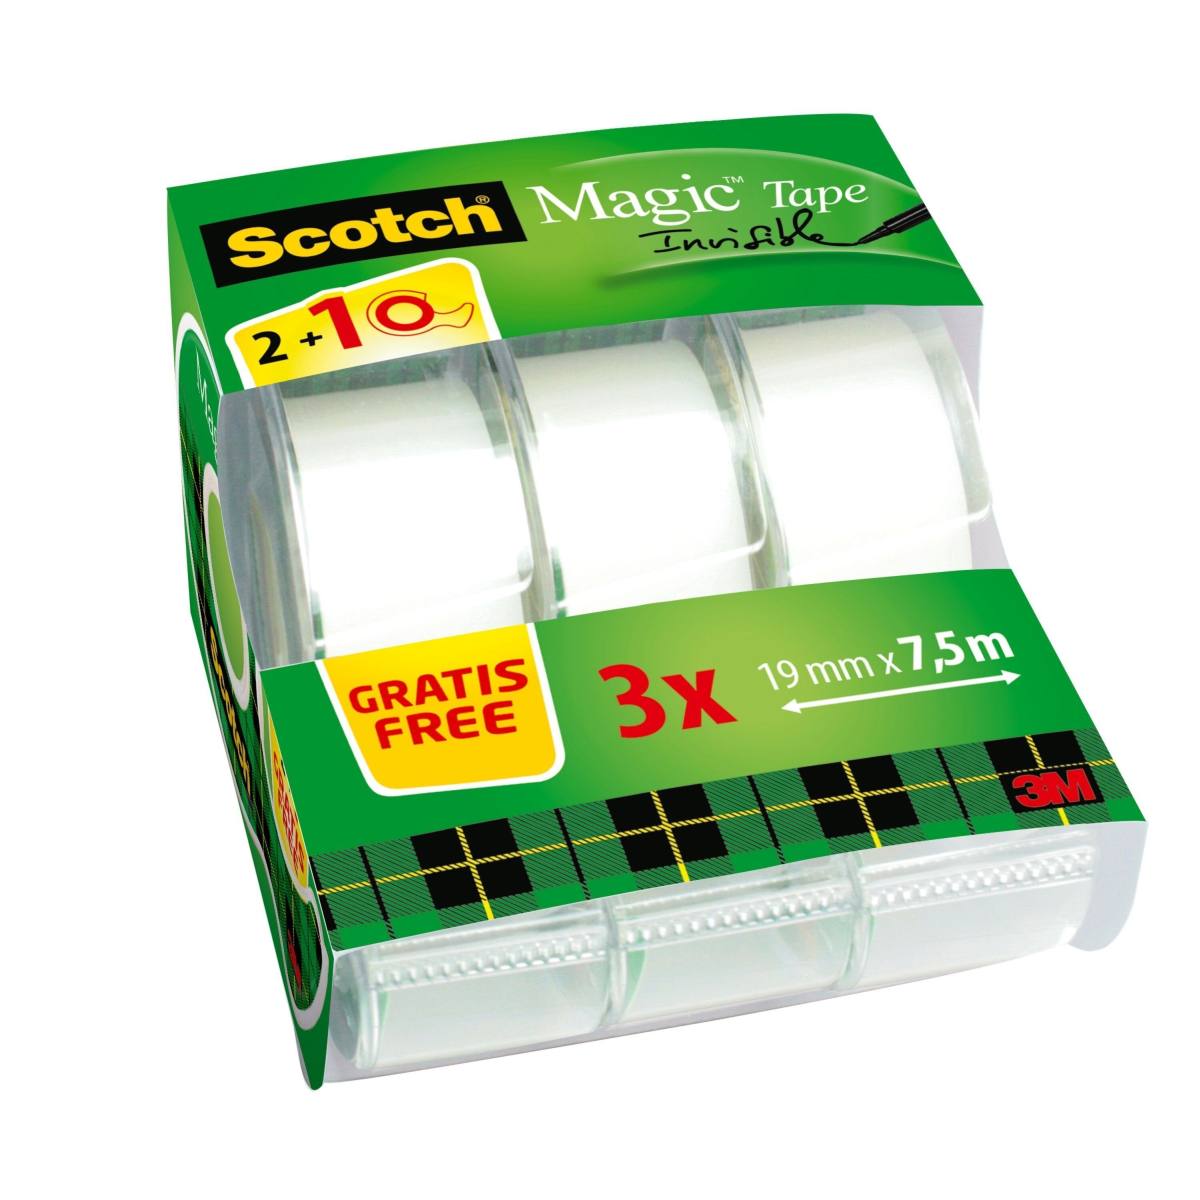 3M Scotch Magic Adhesive Tape Caddy Pack 2 rolls + 1 FREE 19 mm x 7.5 m + hand dispenser